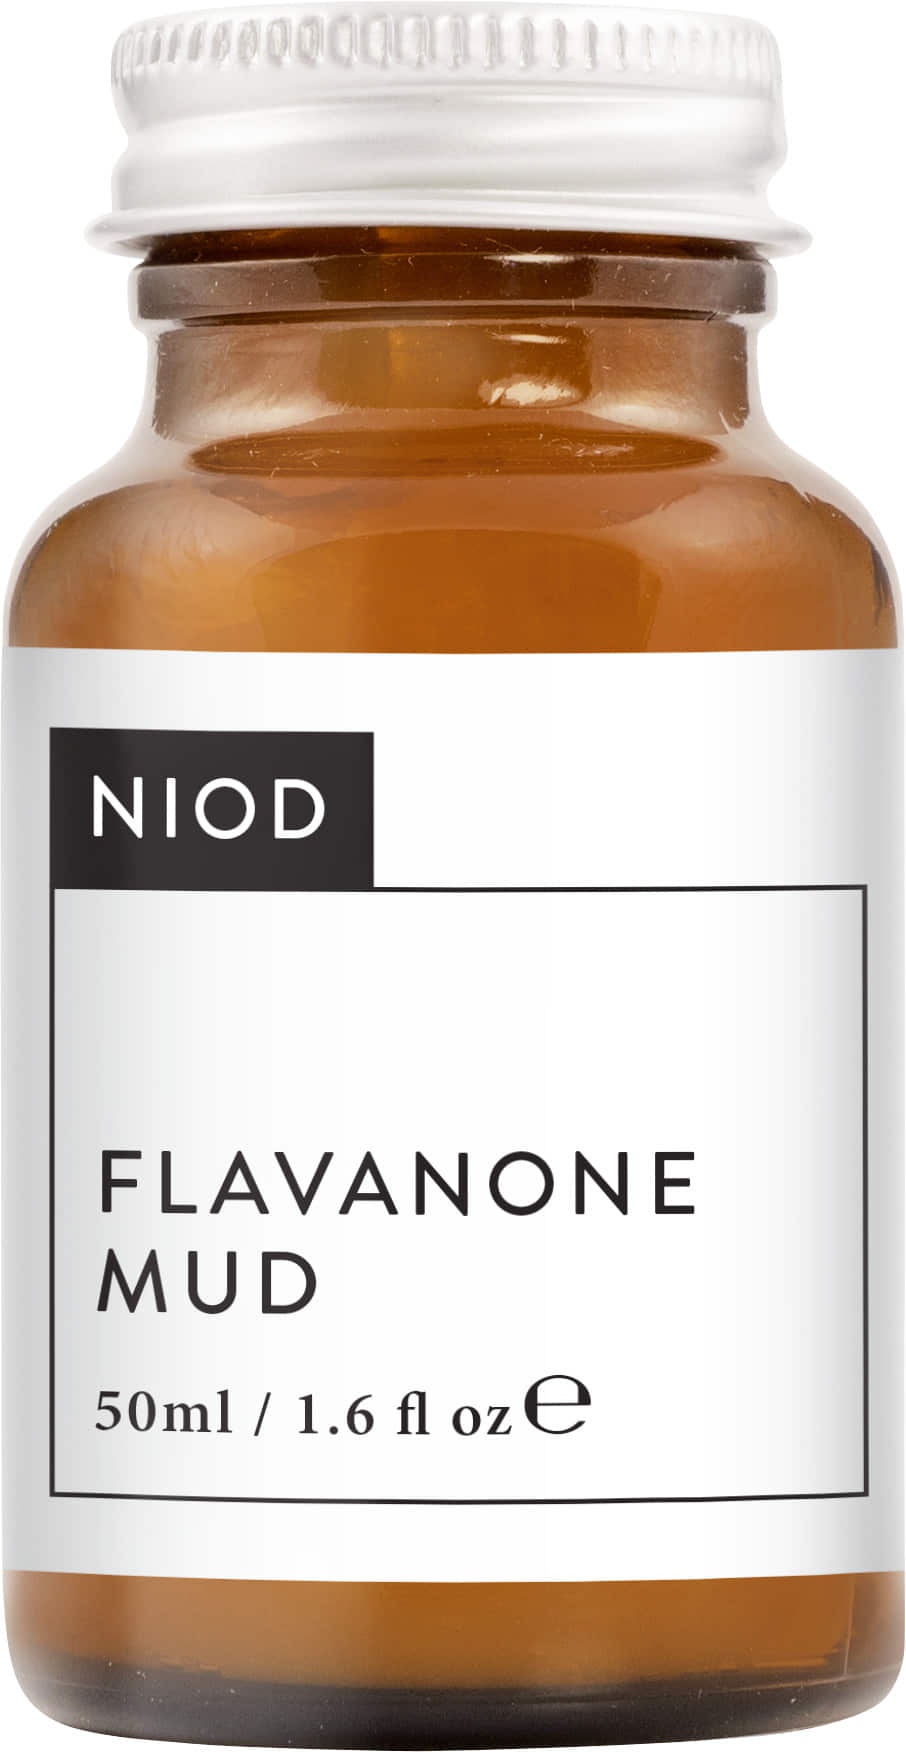 NIOD Flavanone Mud